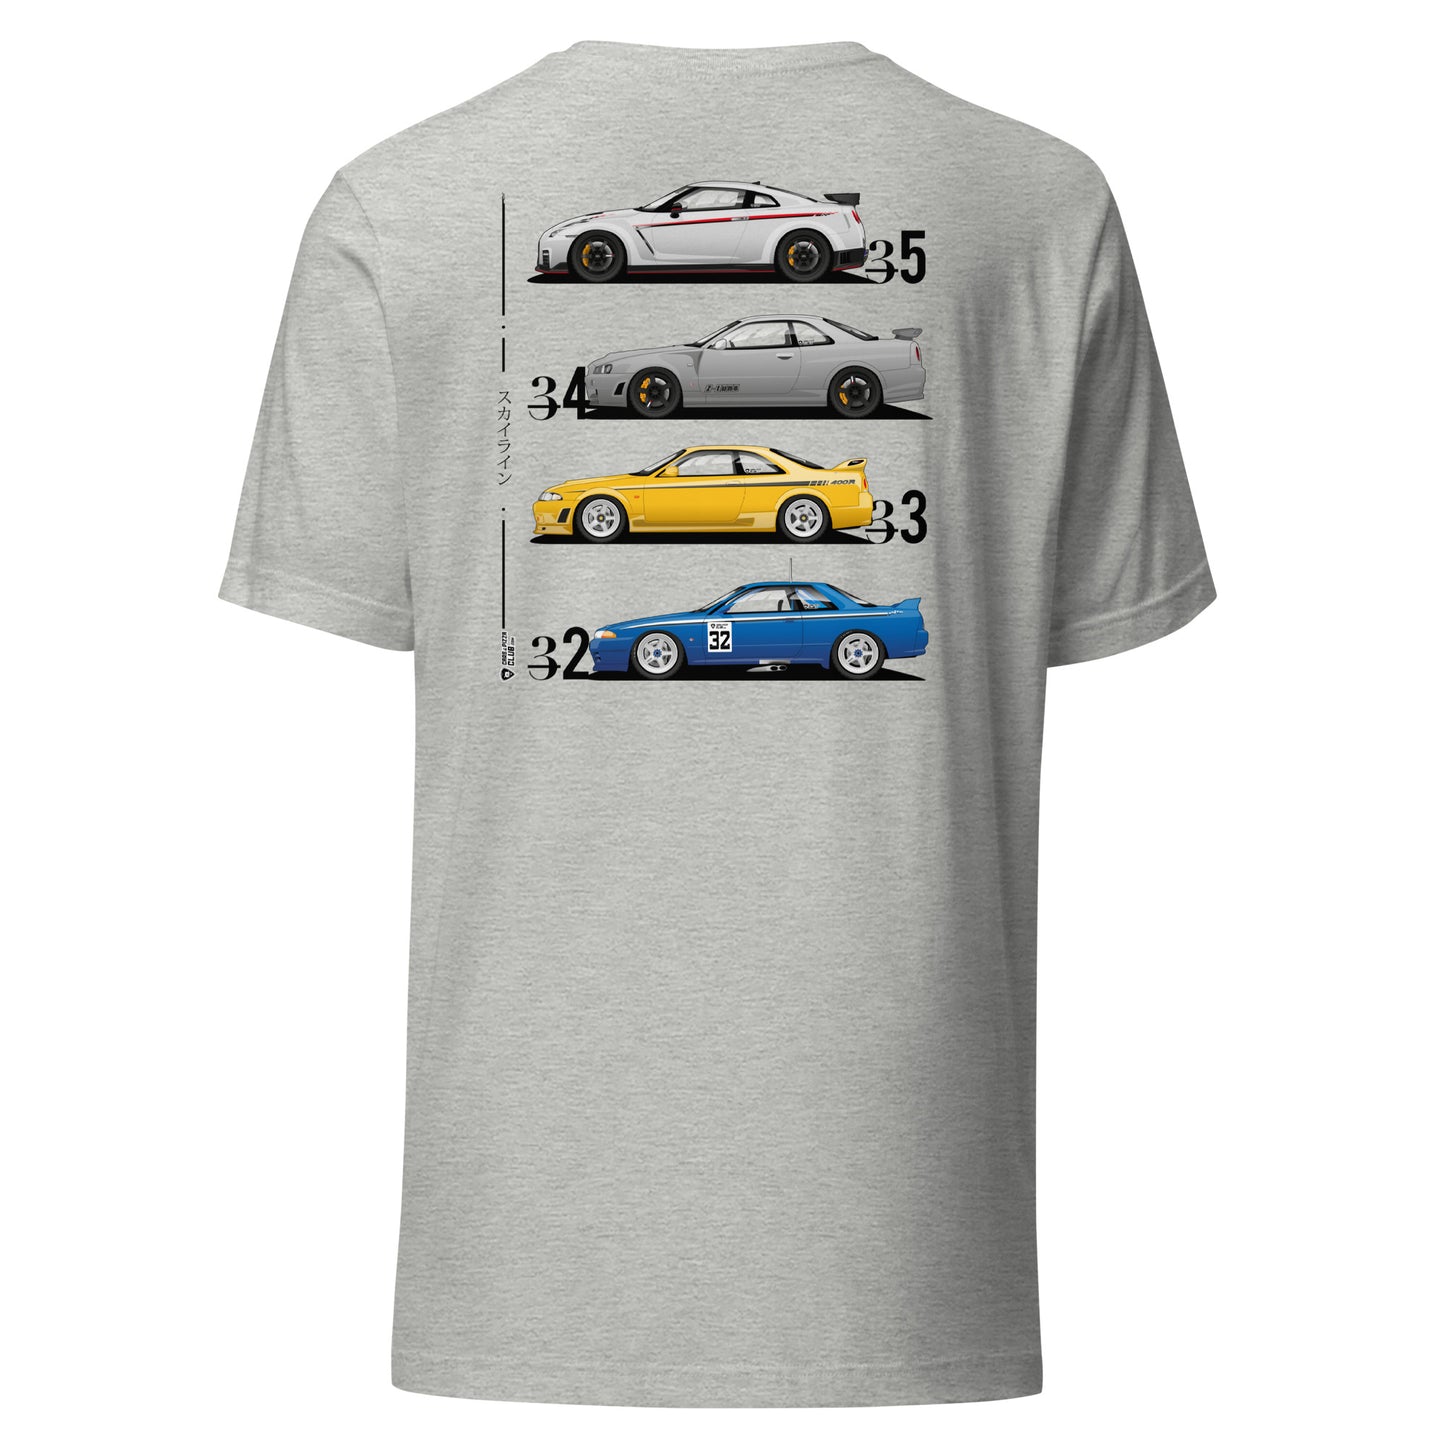 Camiseta unisex Skyline GT-Rs